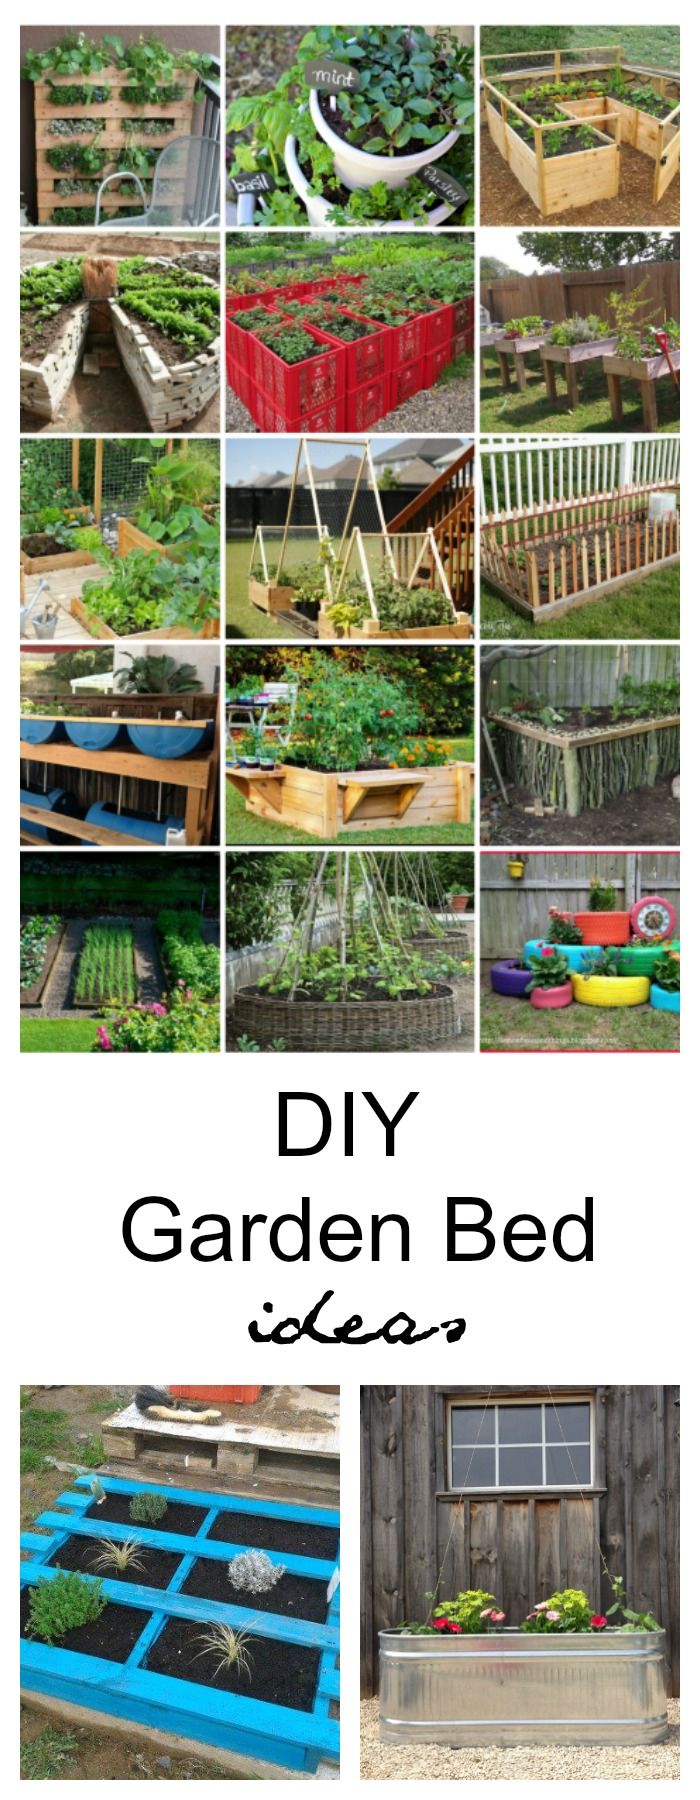 DIY Garden Bed Ideas